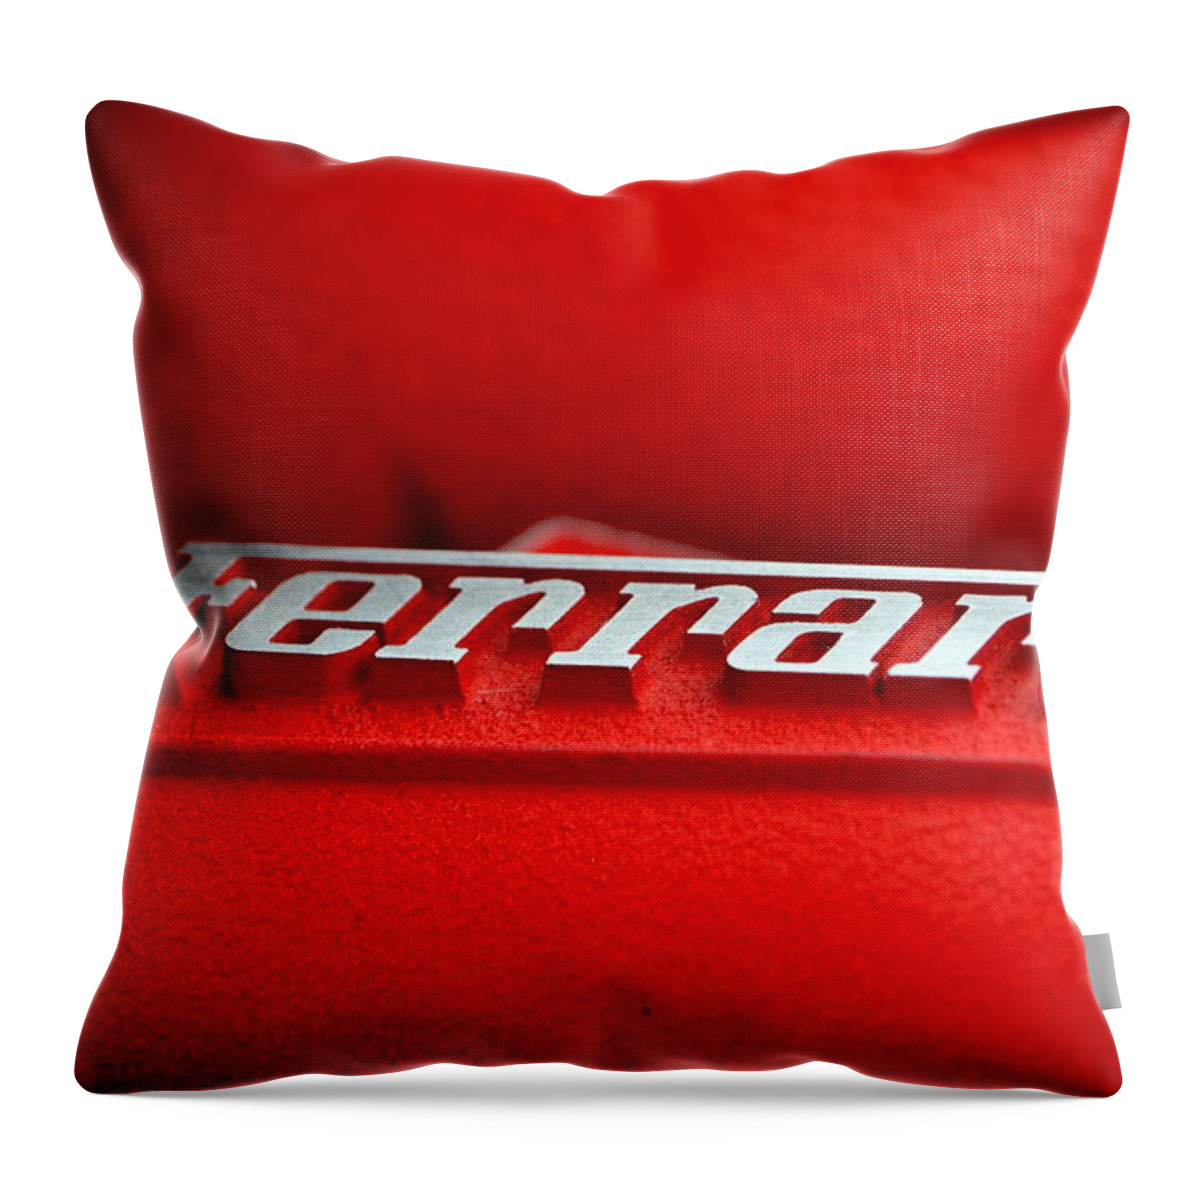  Throw Pillow featuring the photograph Ferrari Intake by Dean Ferreira